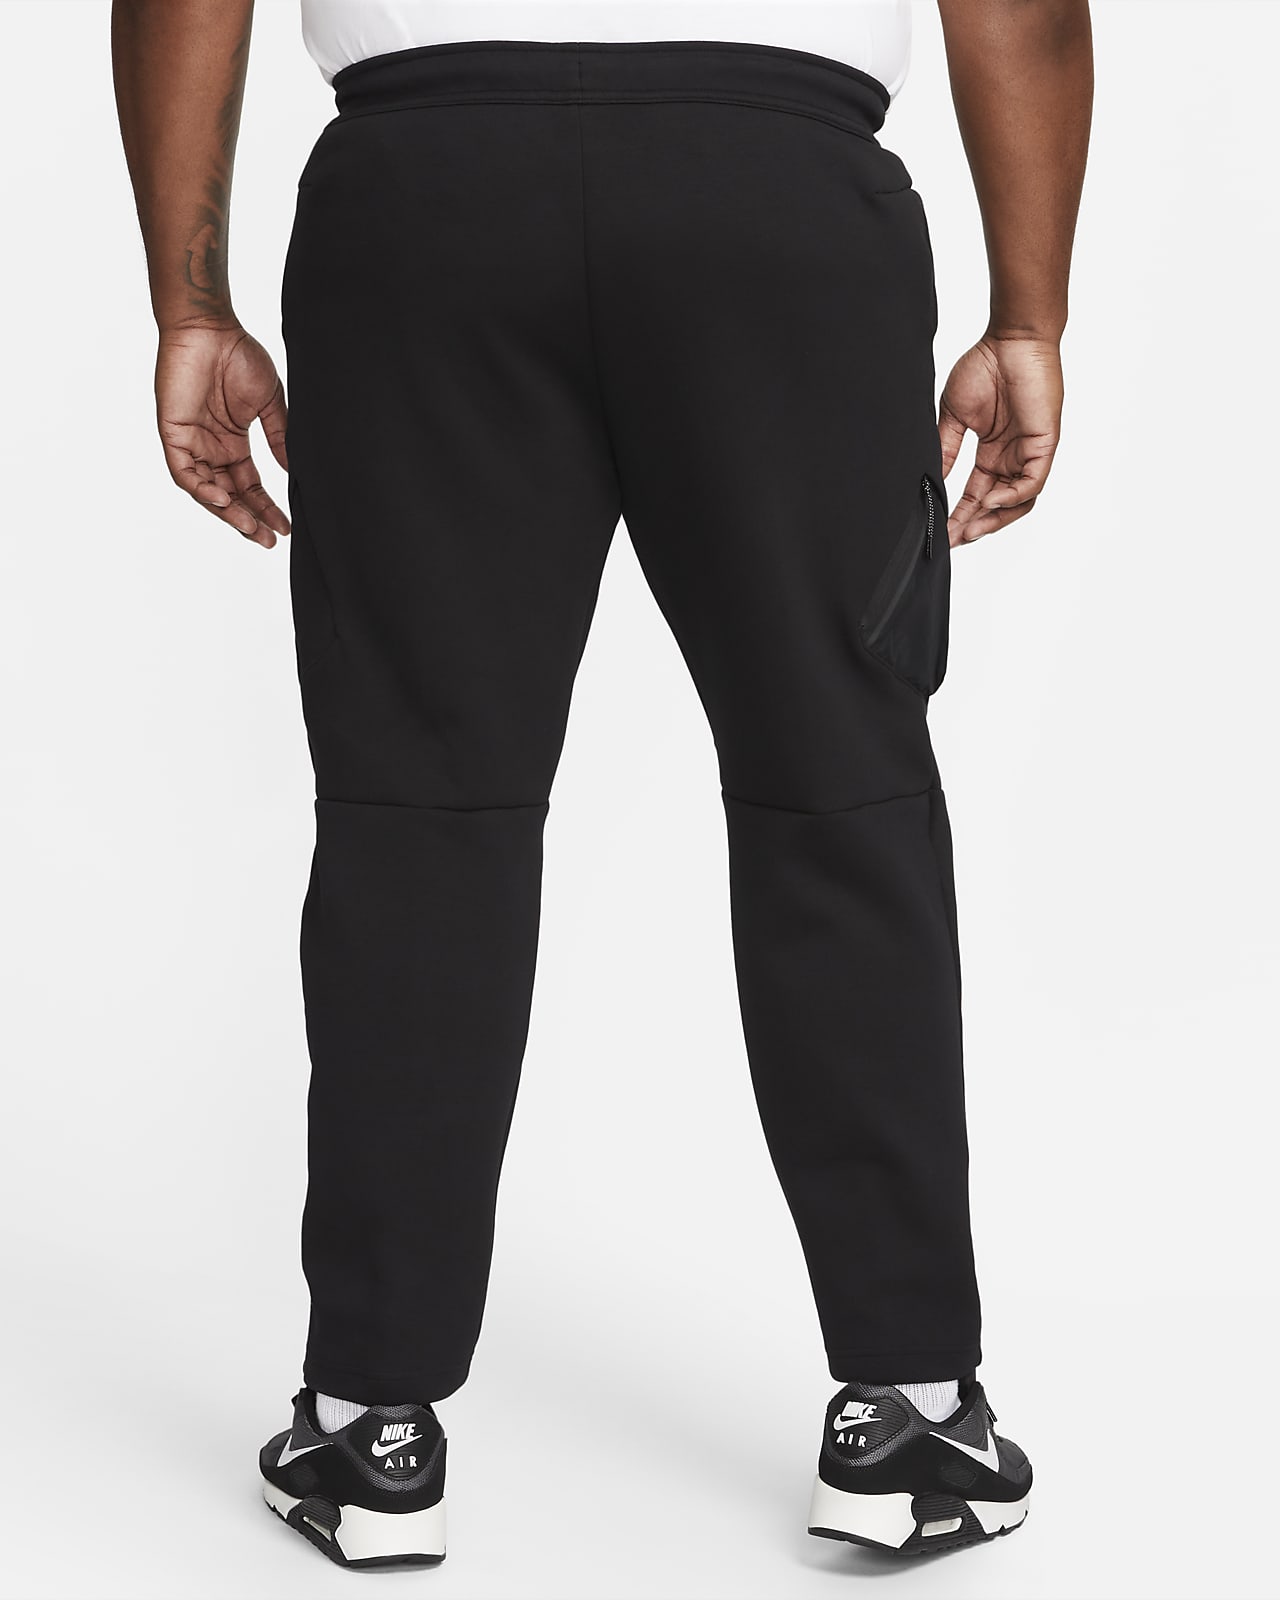 nike sportswear tech fleece utility pant, DM6453-063, GREY